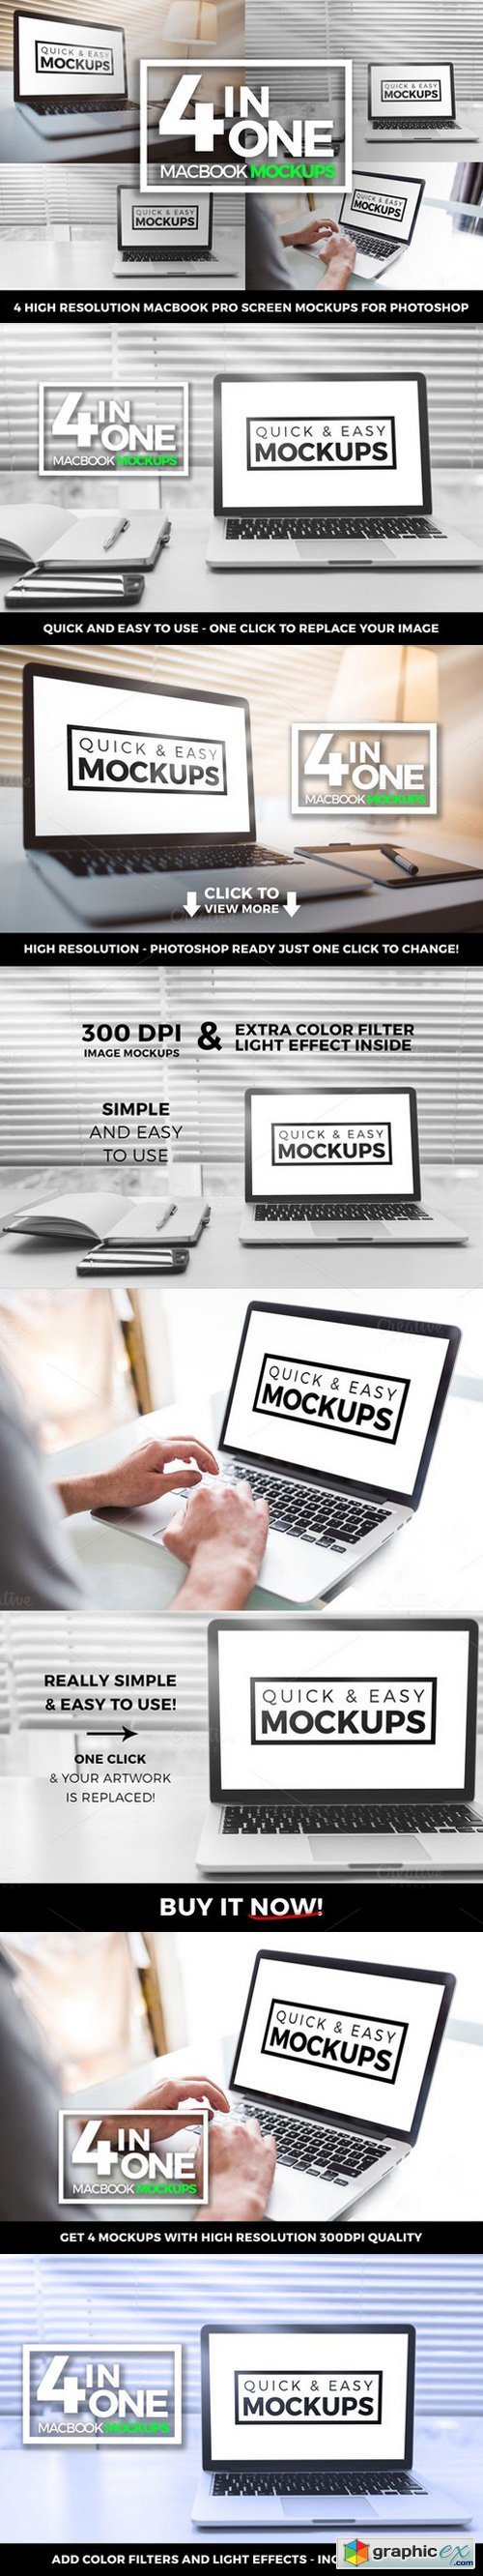 Macbook Pro Mockup Office 4 in one